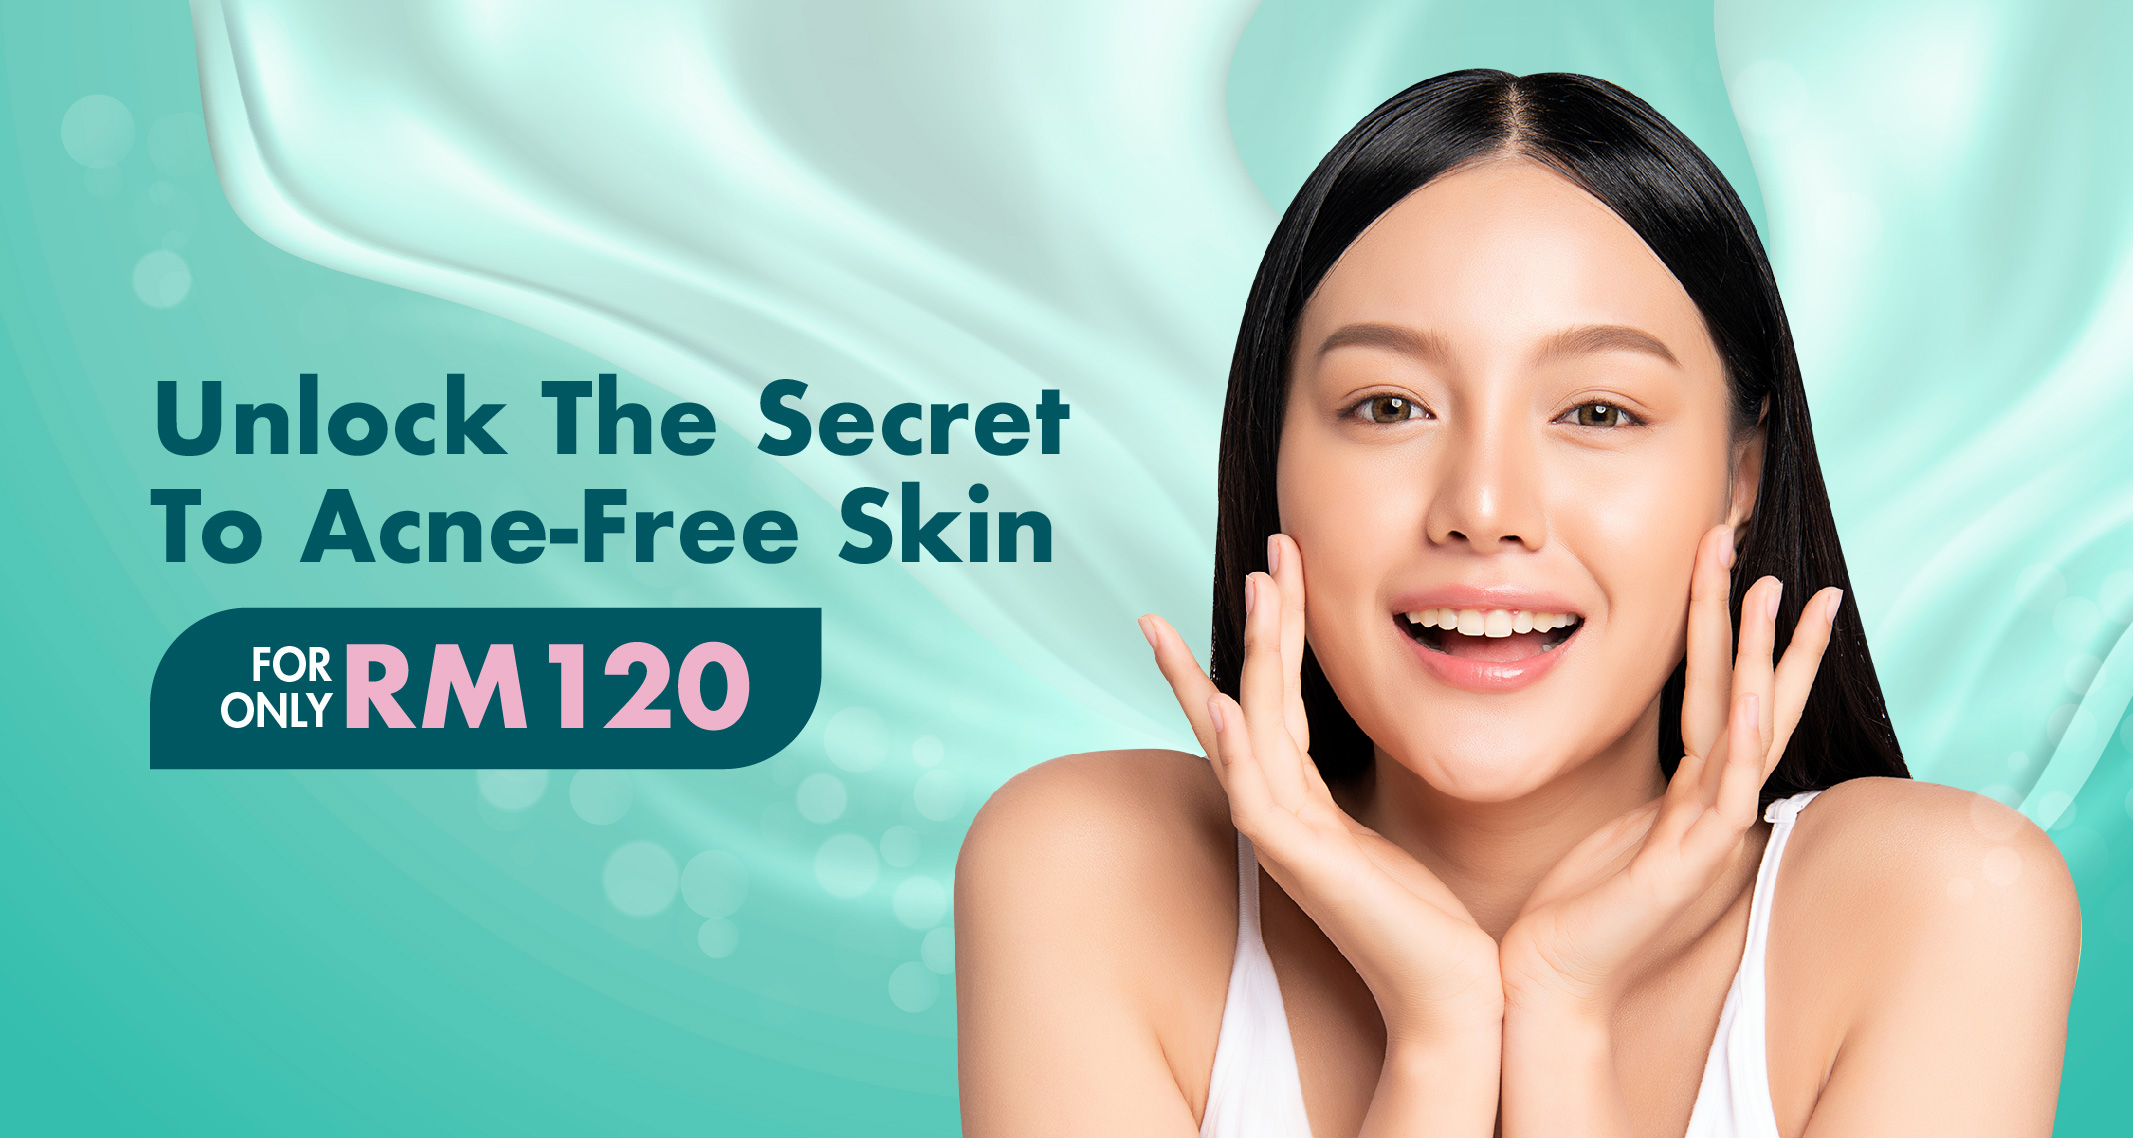 Unlock the secret to acne-free skin